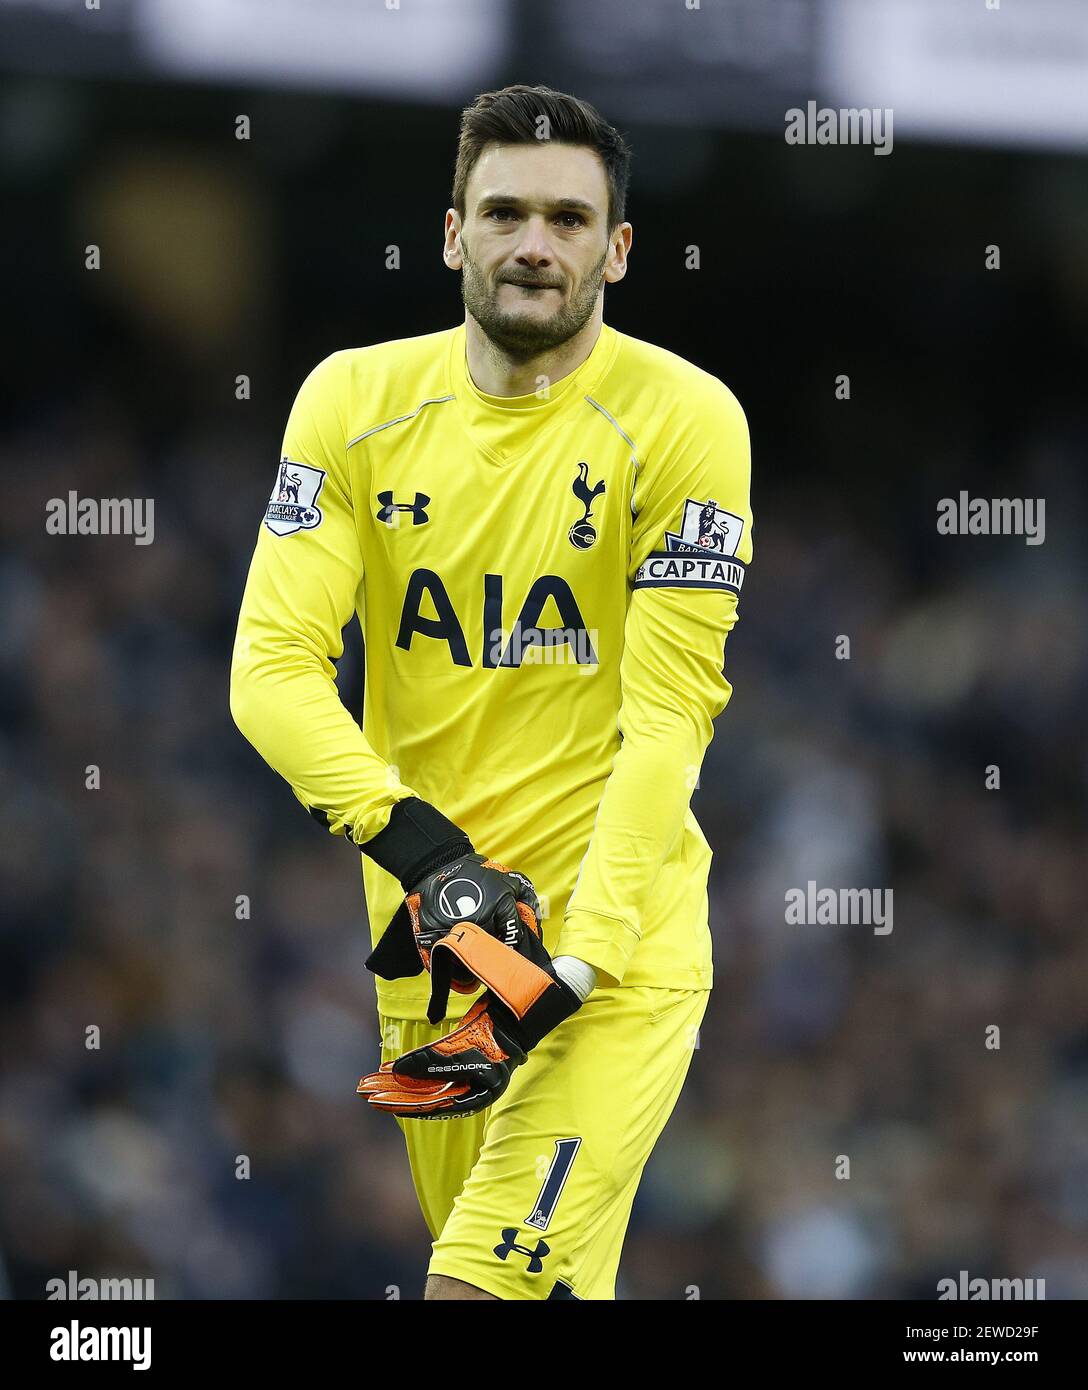 Hugo Lloris di Tottenham indossando i guanti Foto stock - Alamy